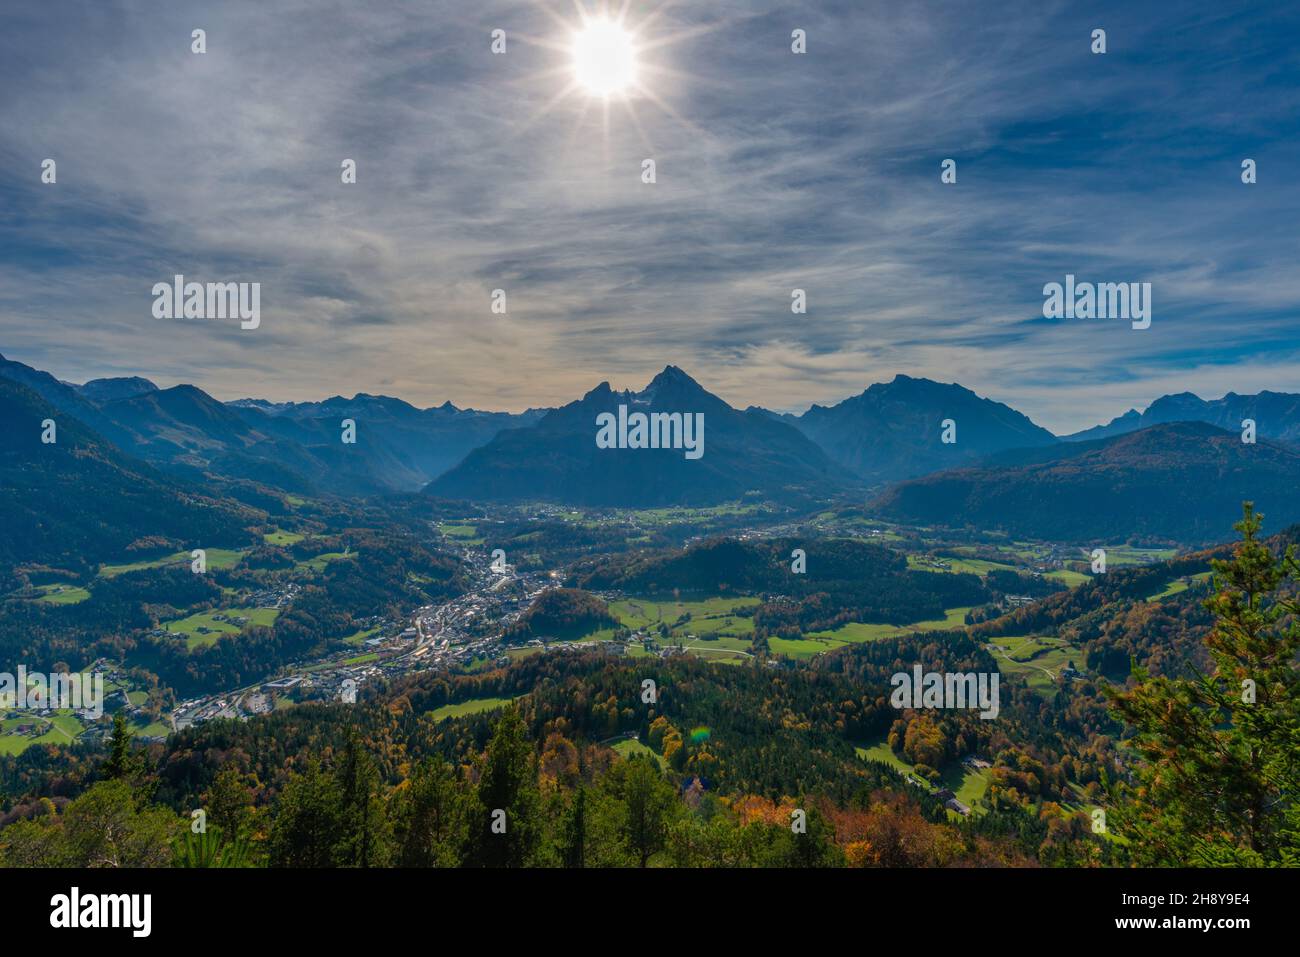 Watzmann mountain and Berchtesgaden seen from Kneifelspitz Mountain, 1168m asl, Maria Gern, Berchtesgaden, Upper Bavaria, Southern Germany Stock Photo